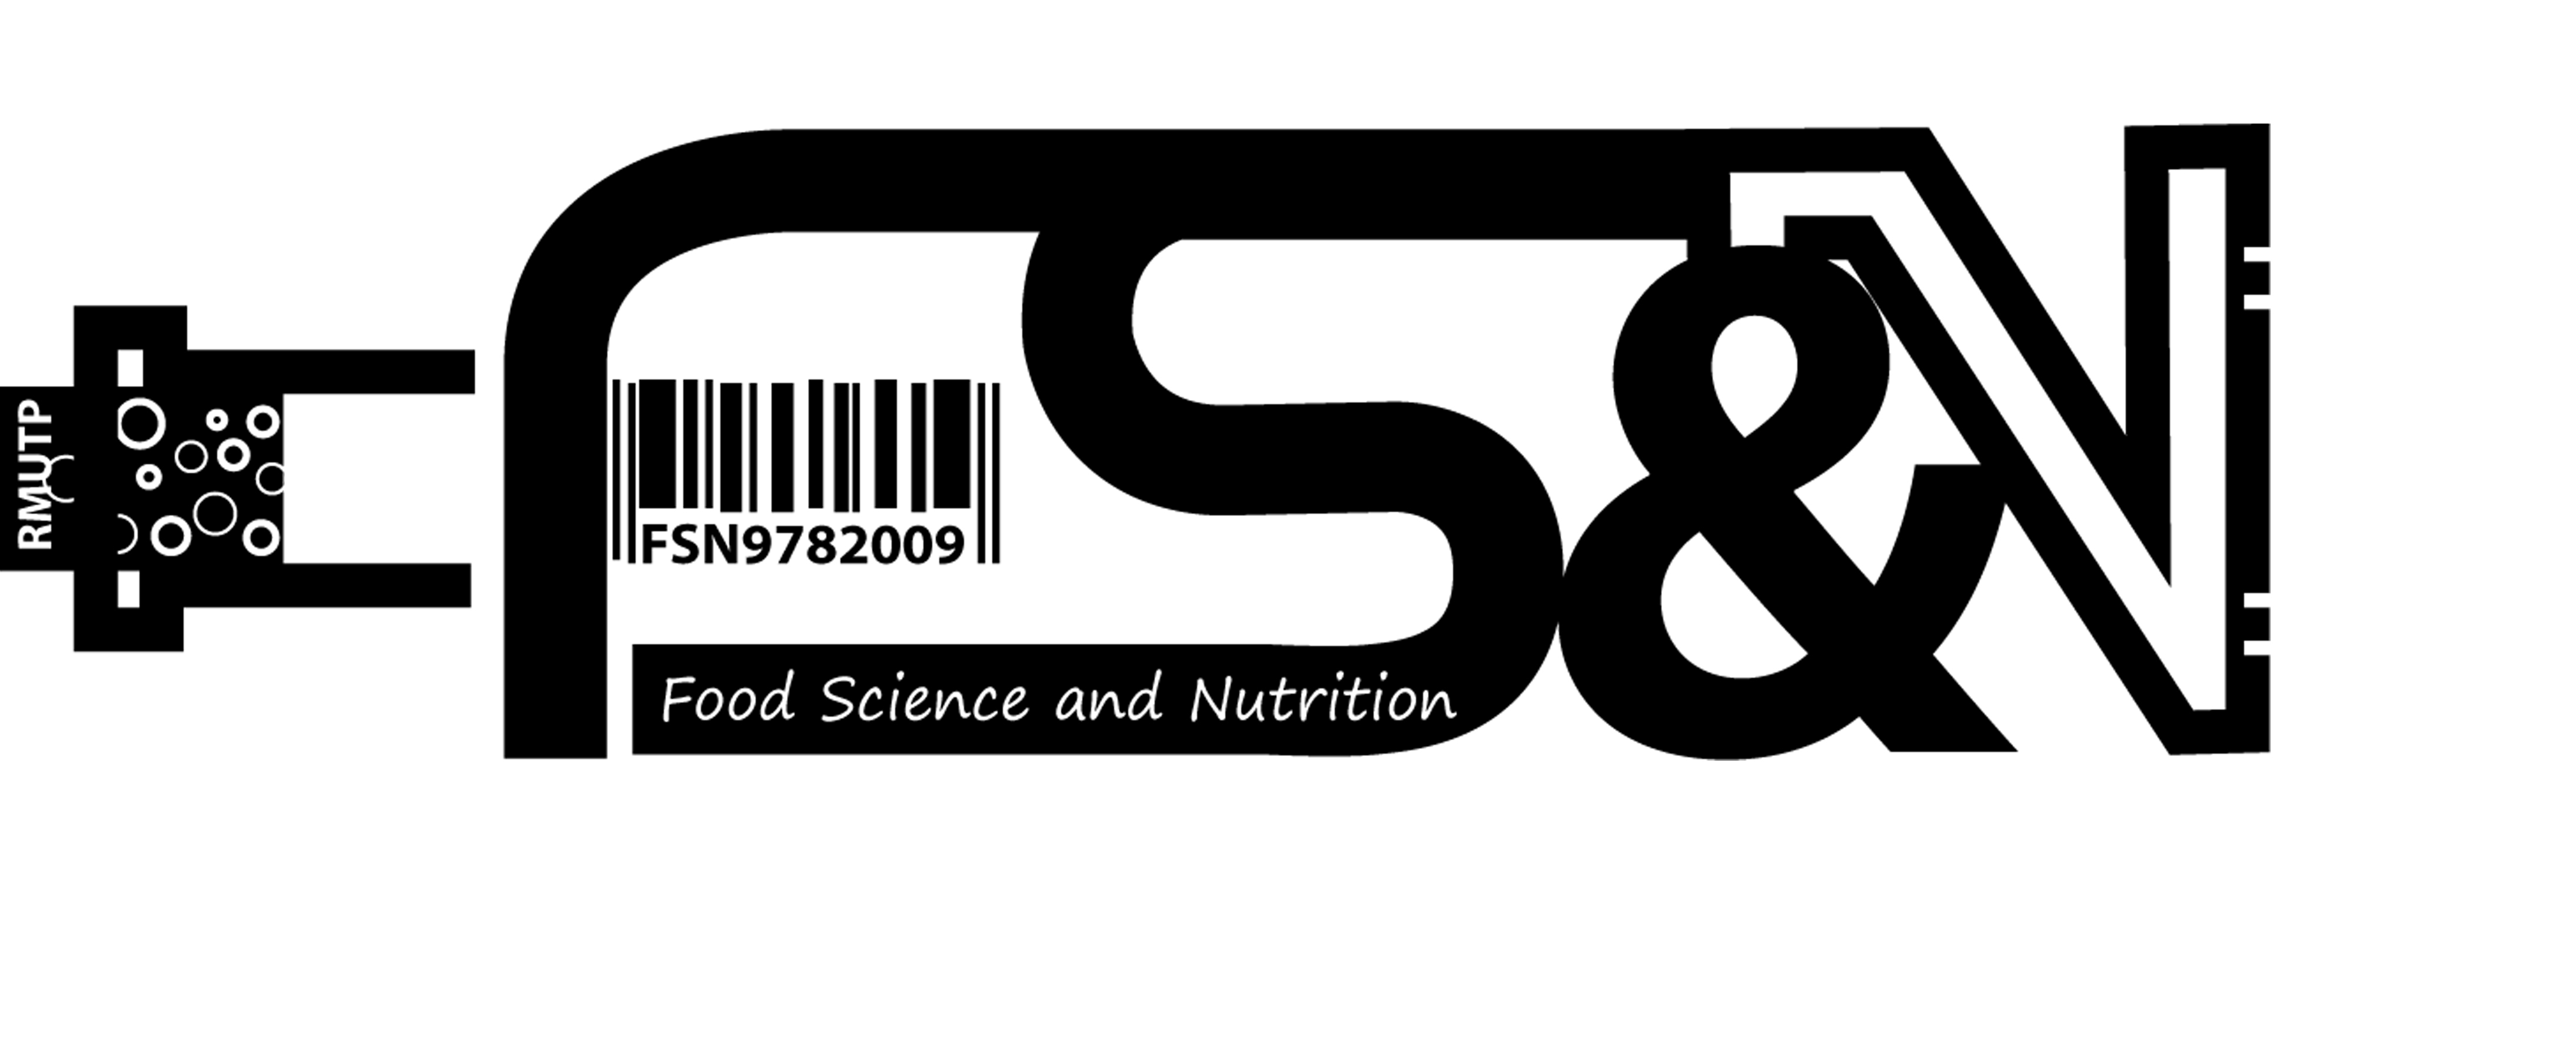 FsM_logo02